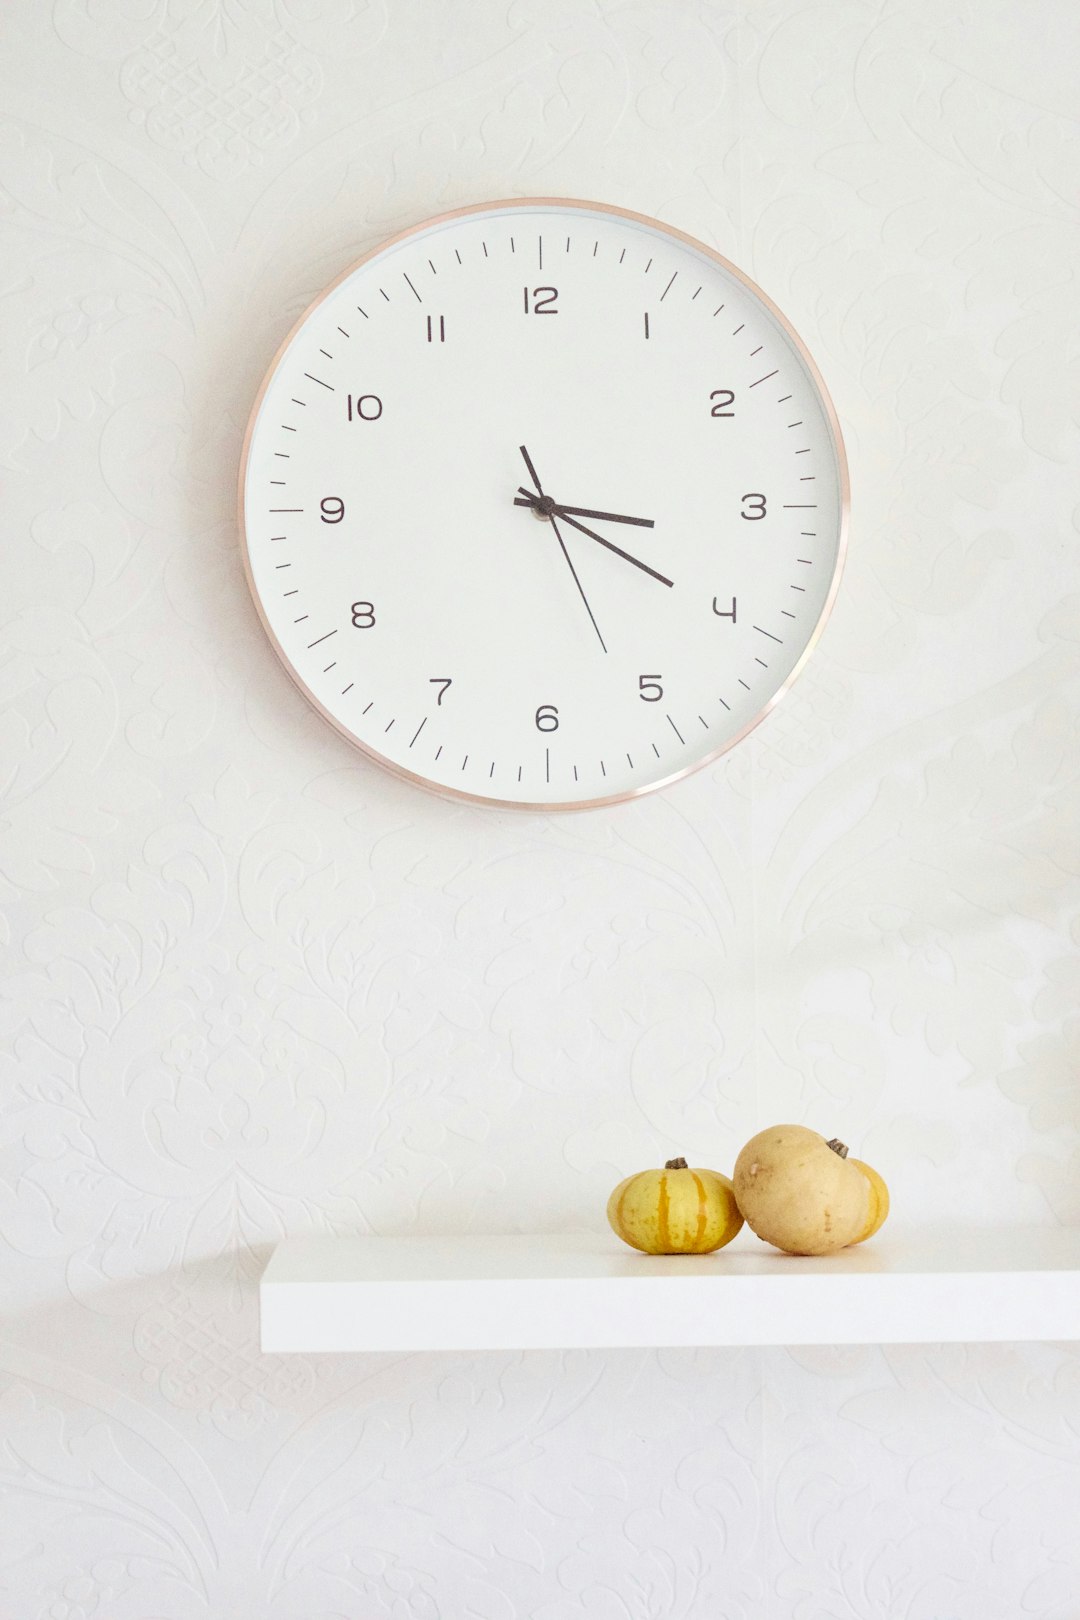  two pumpkins on table below wall clock clock